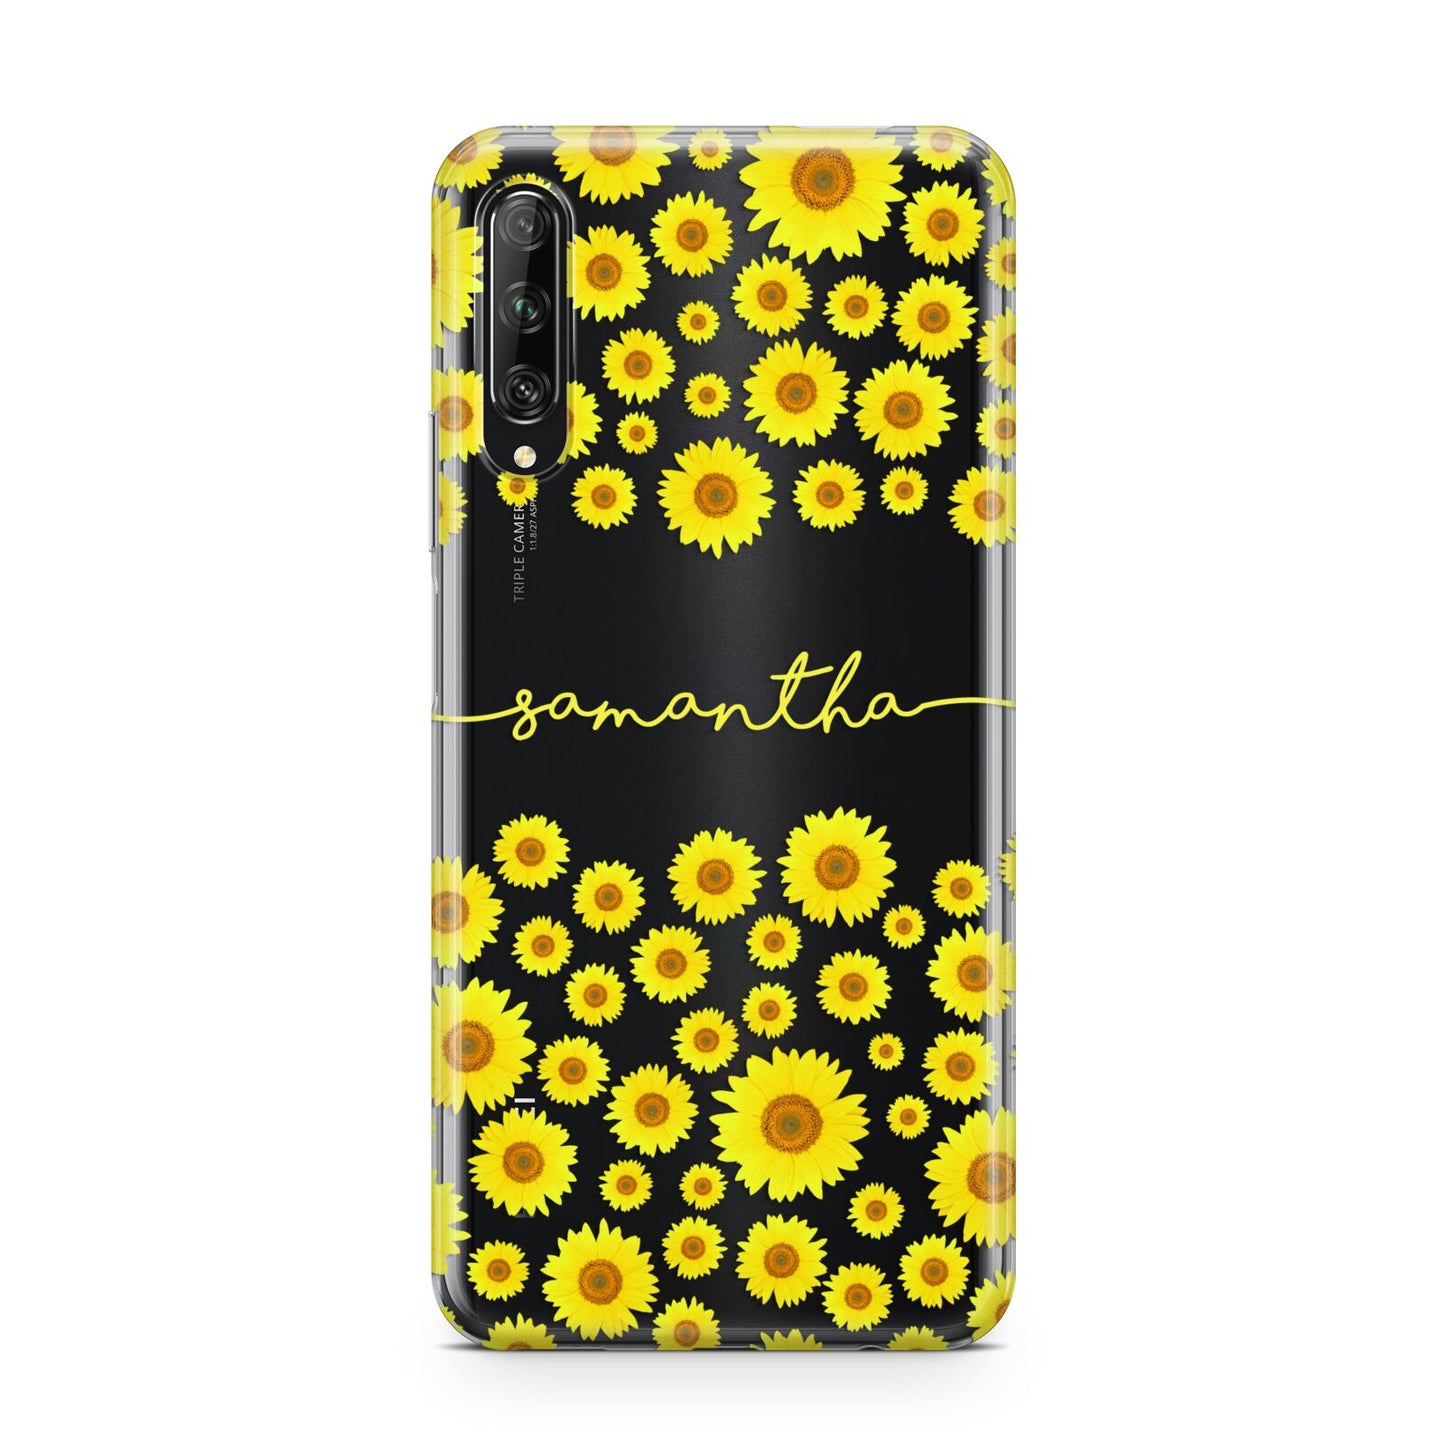 Personalised Sunflower Huawei P Smart Pro 2019